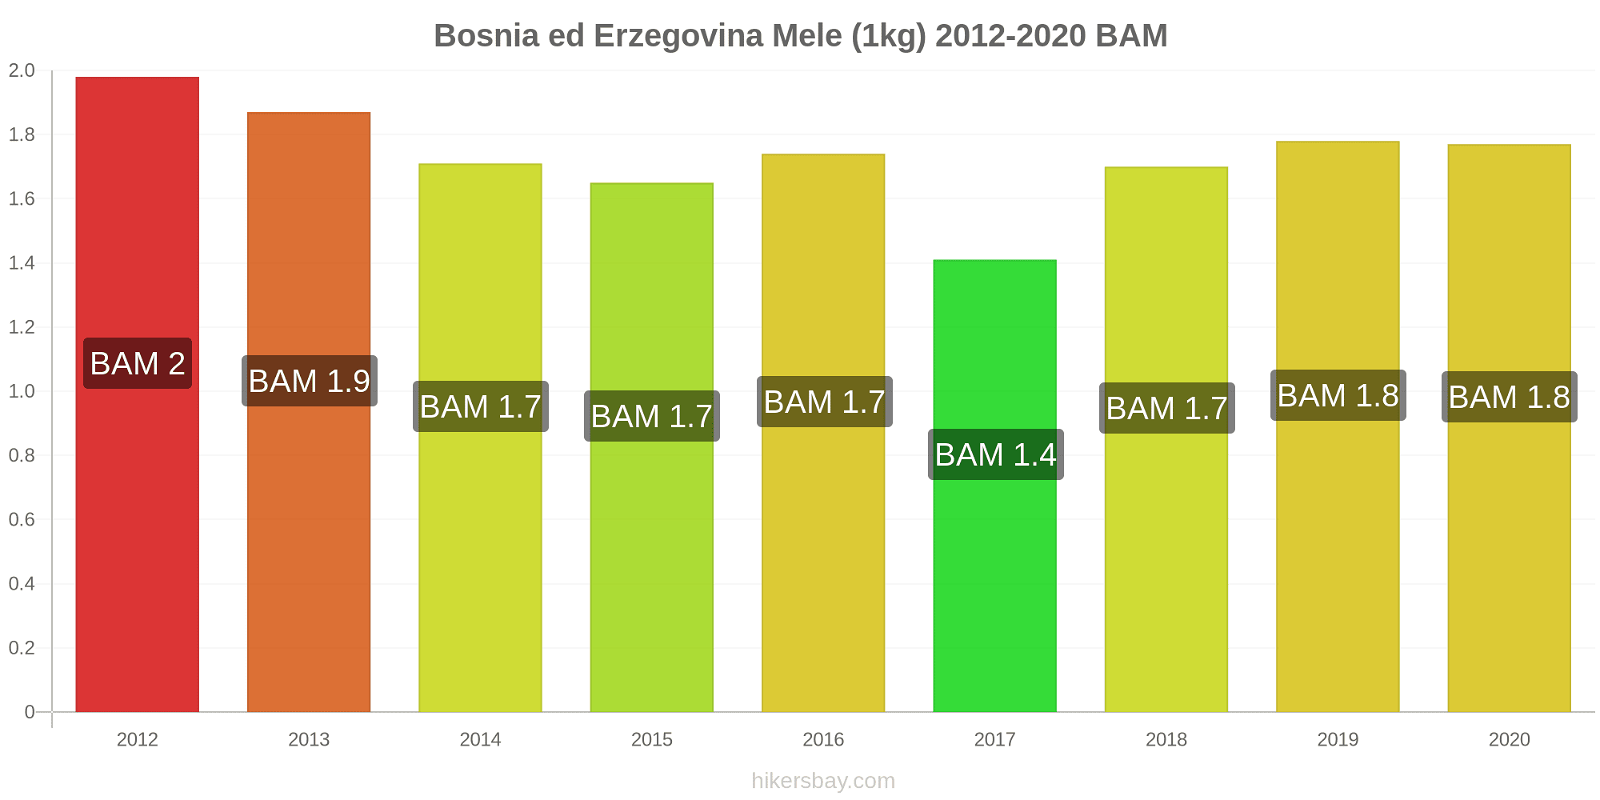 Bosnia ed Erzegovina variazioni di prezzo Mele (1kg) hikersbay.com